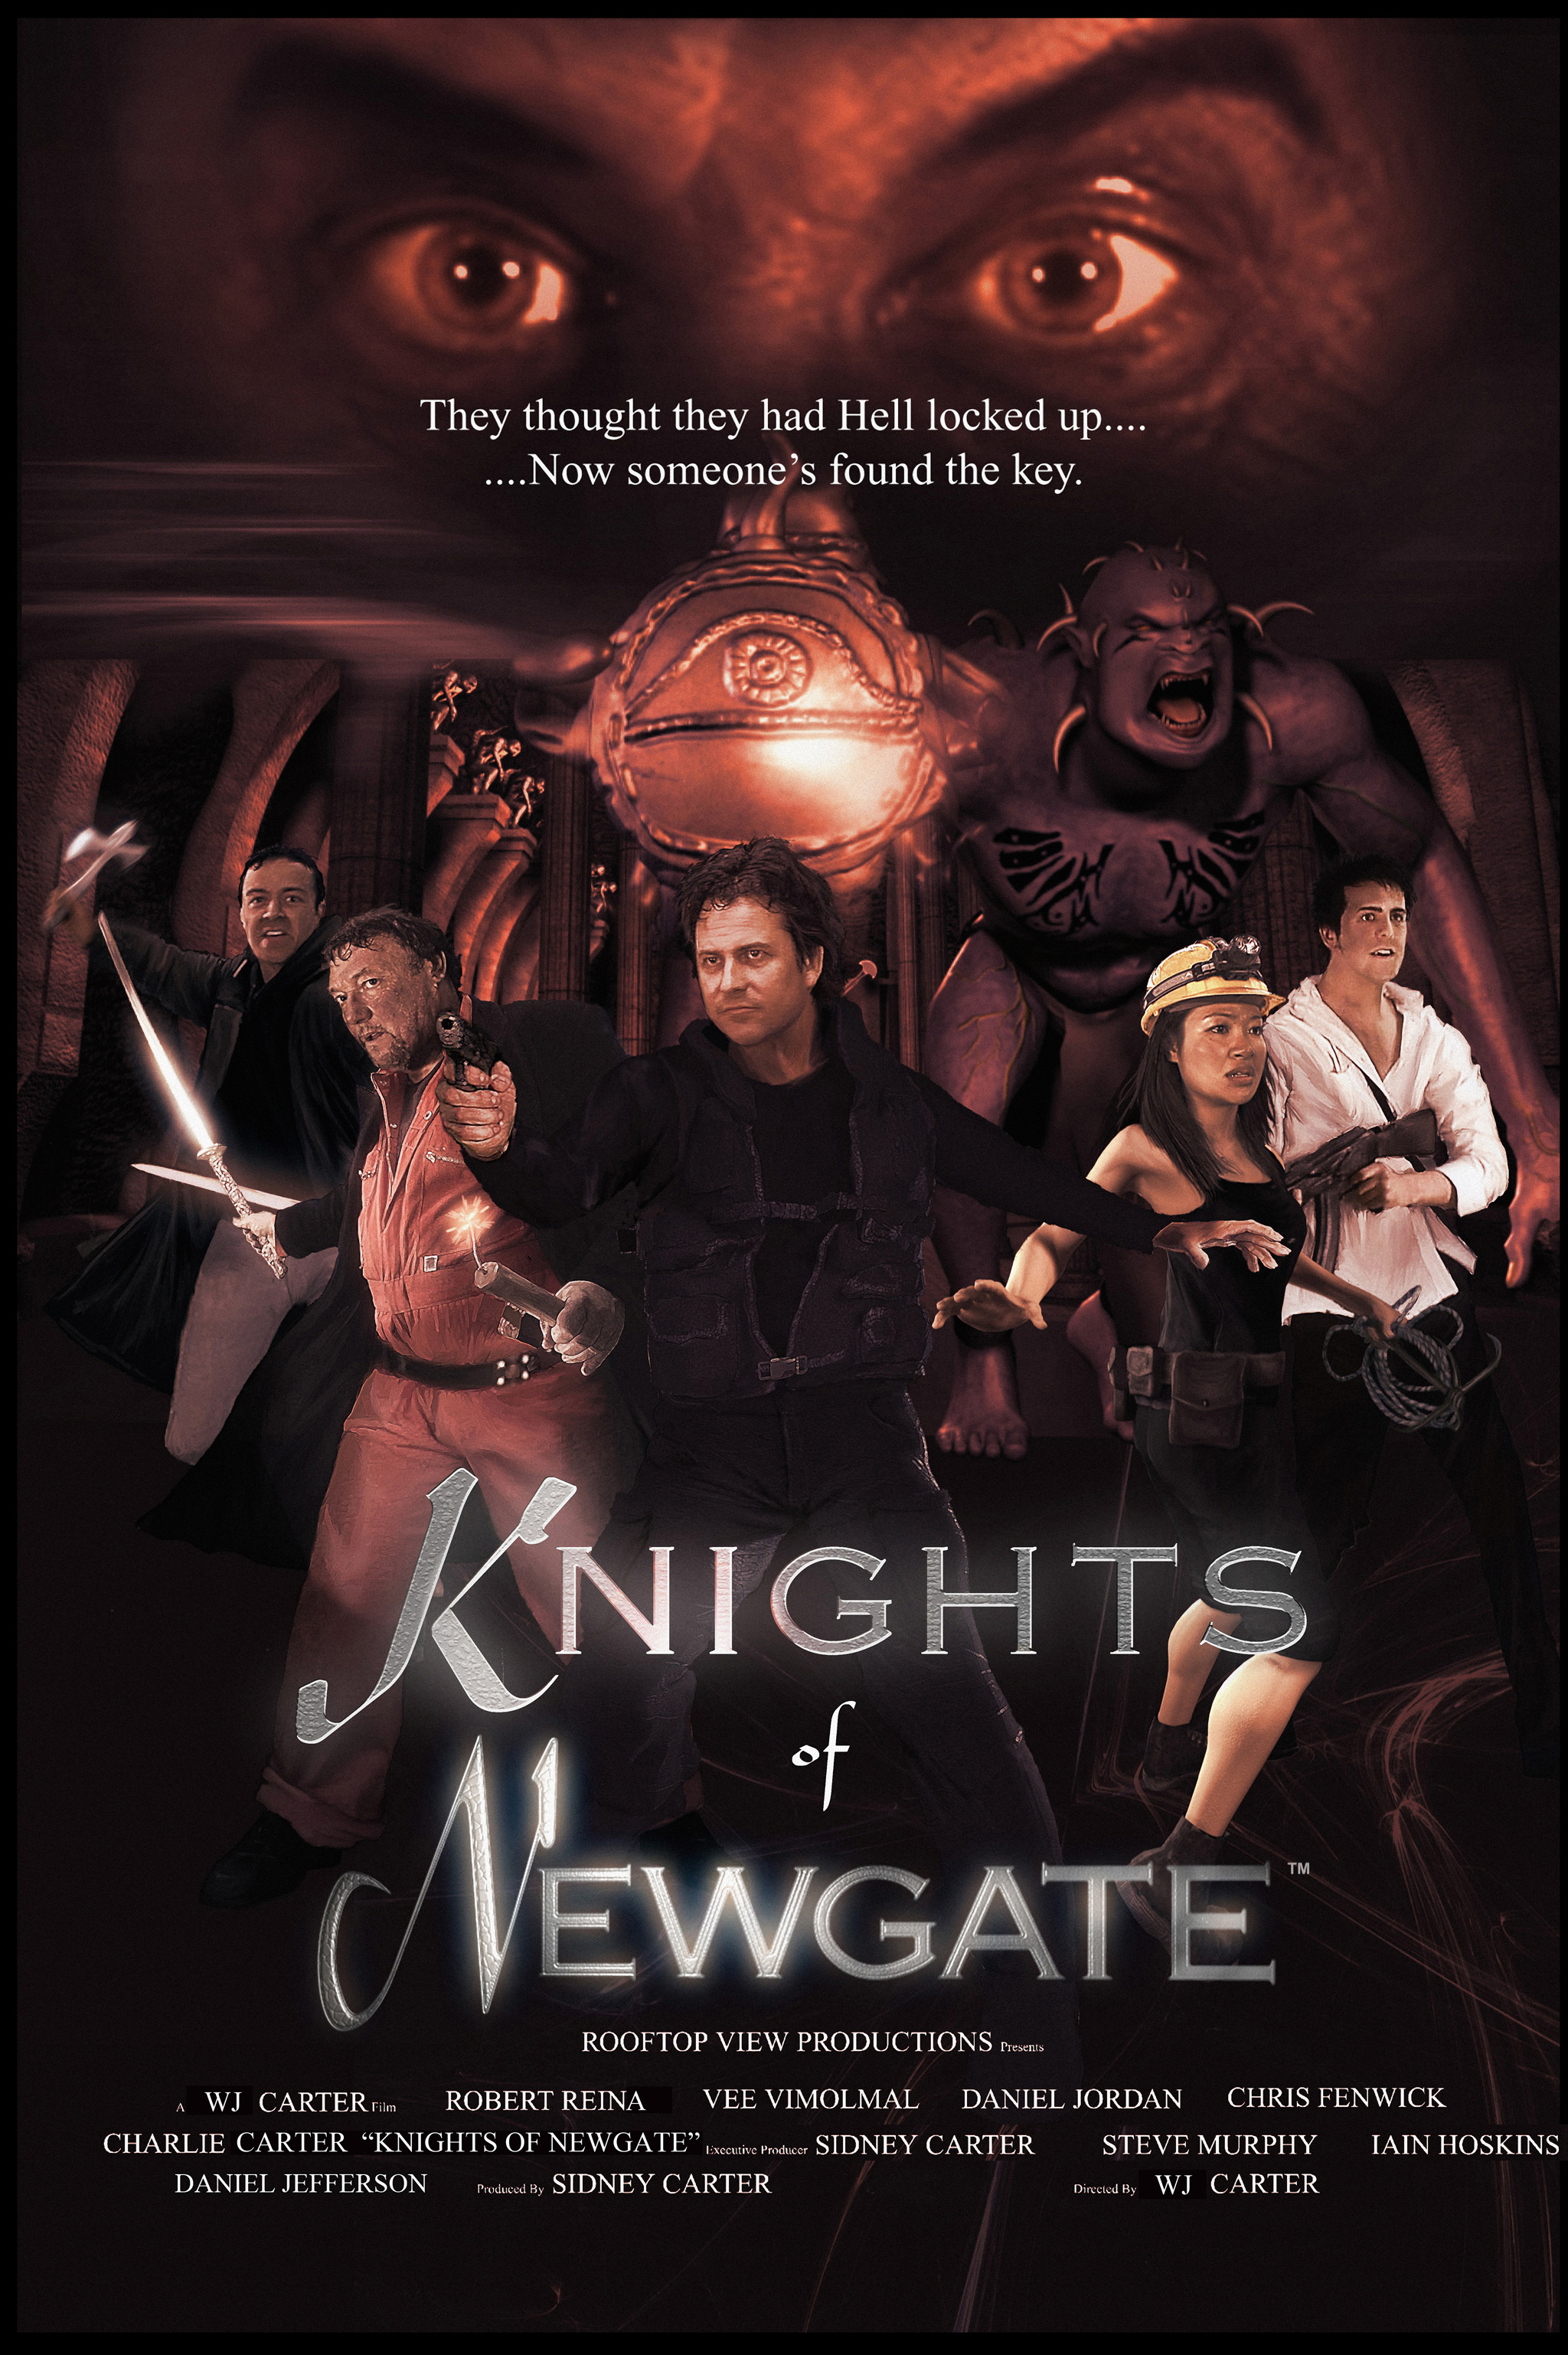 Nonton film Knights of Newgate layarkaca21 indoxx1 ganool online streaming terbaru